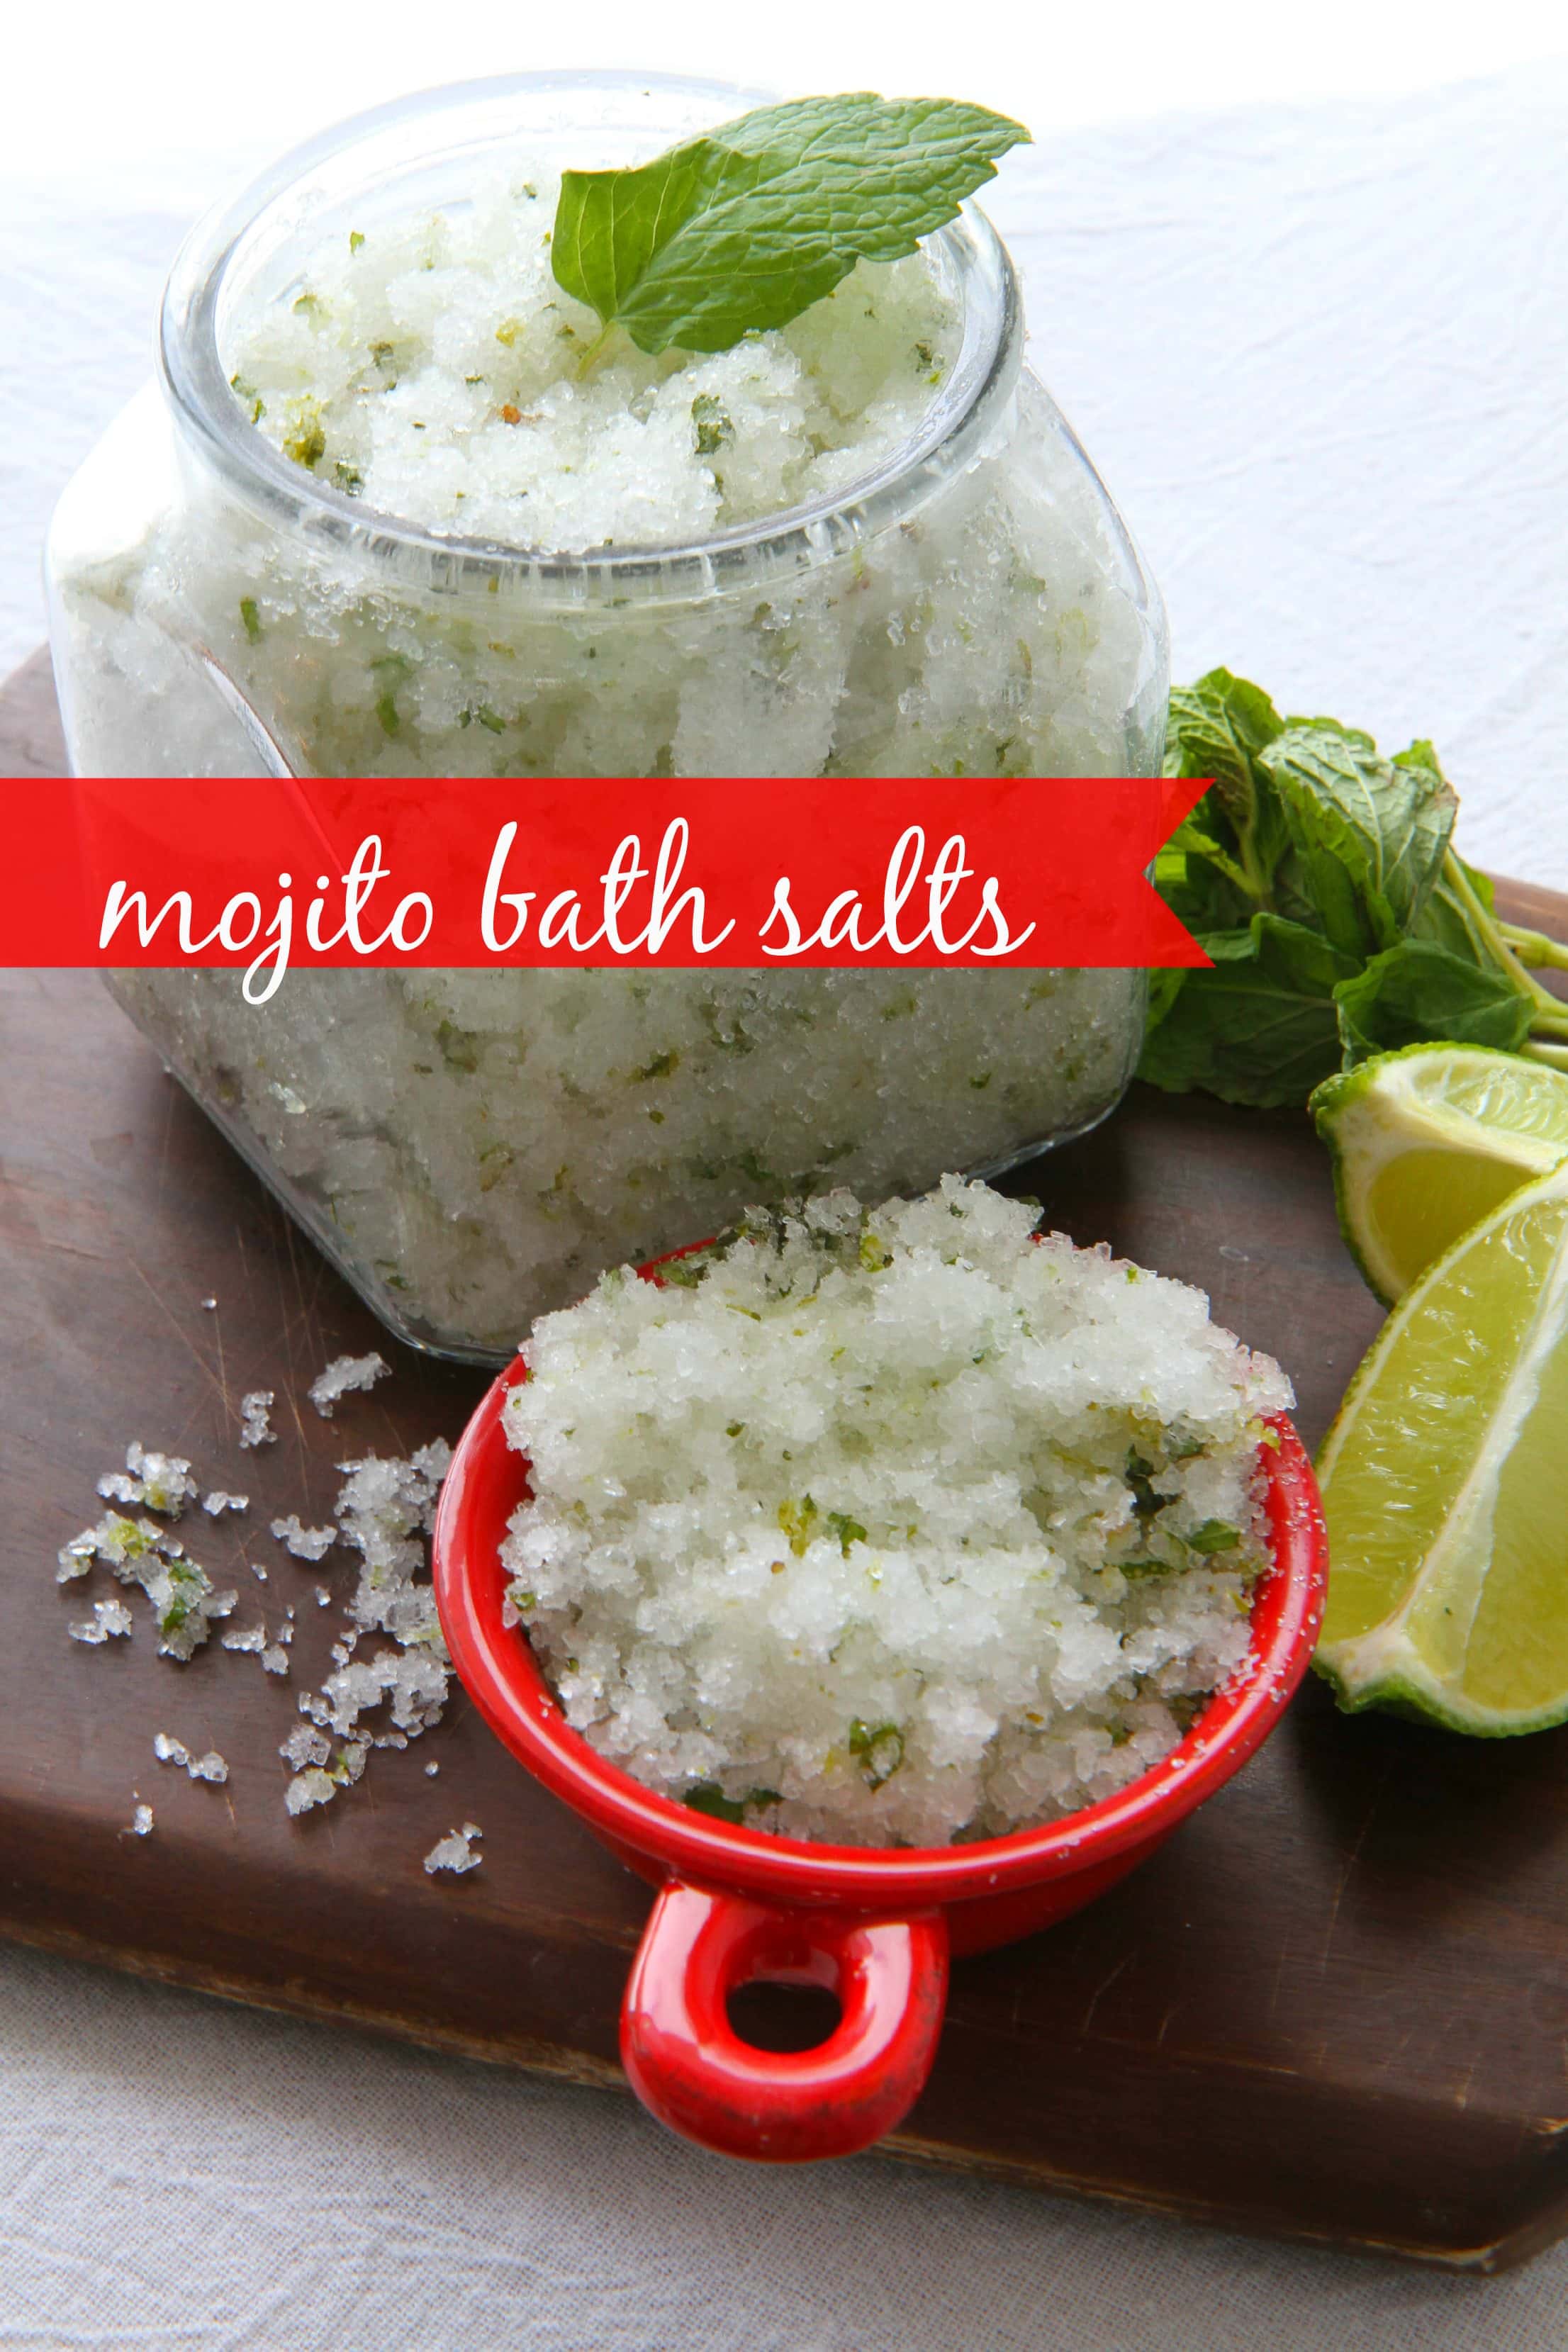 How to Make Mojito Bath Salts